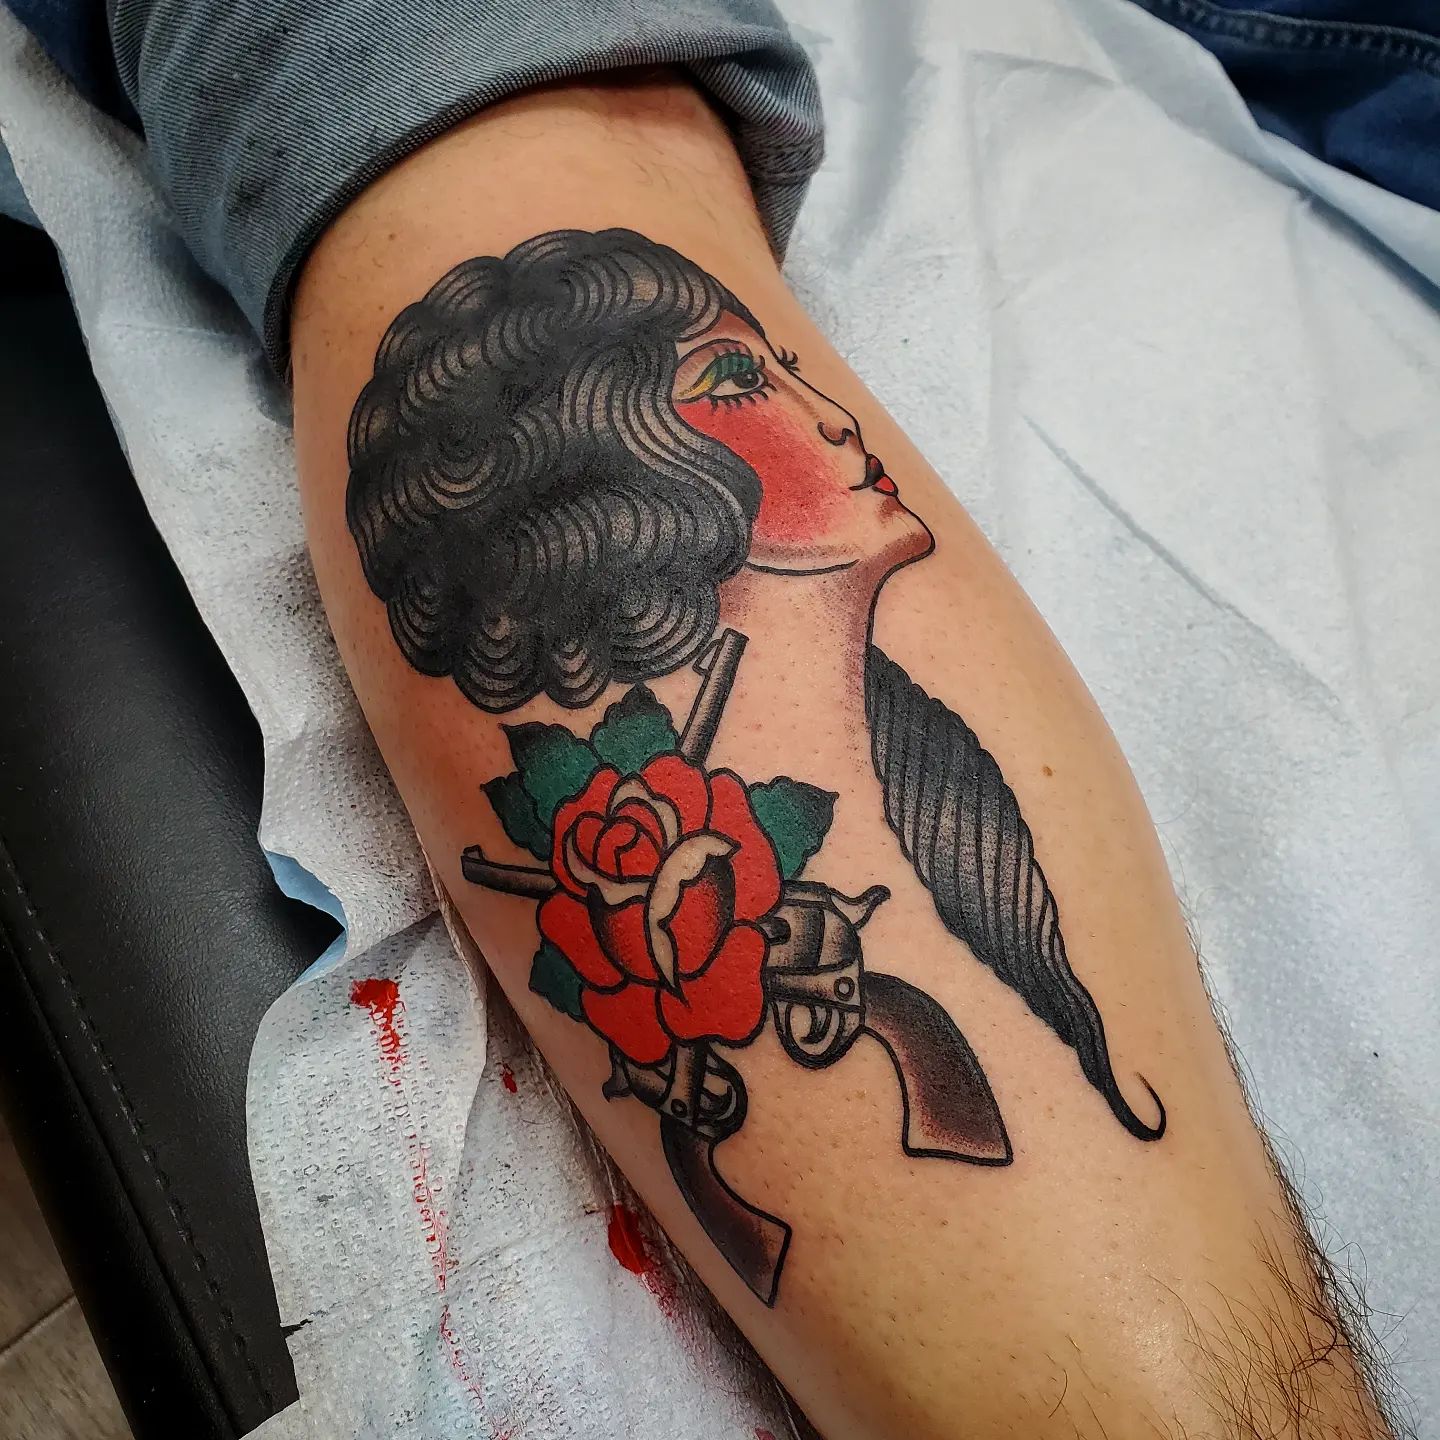 Tatuaje retro de mujer en la pantorrilla